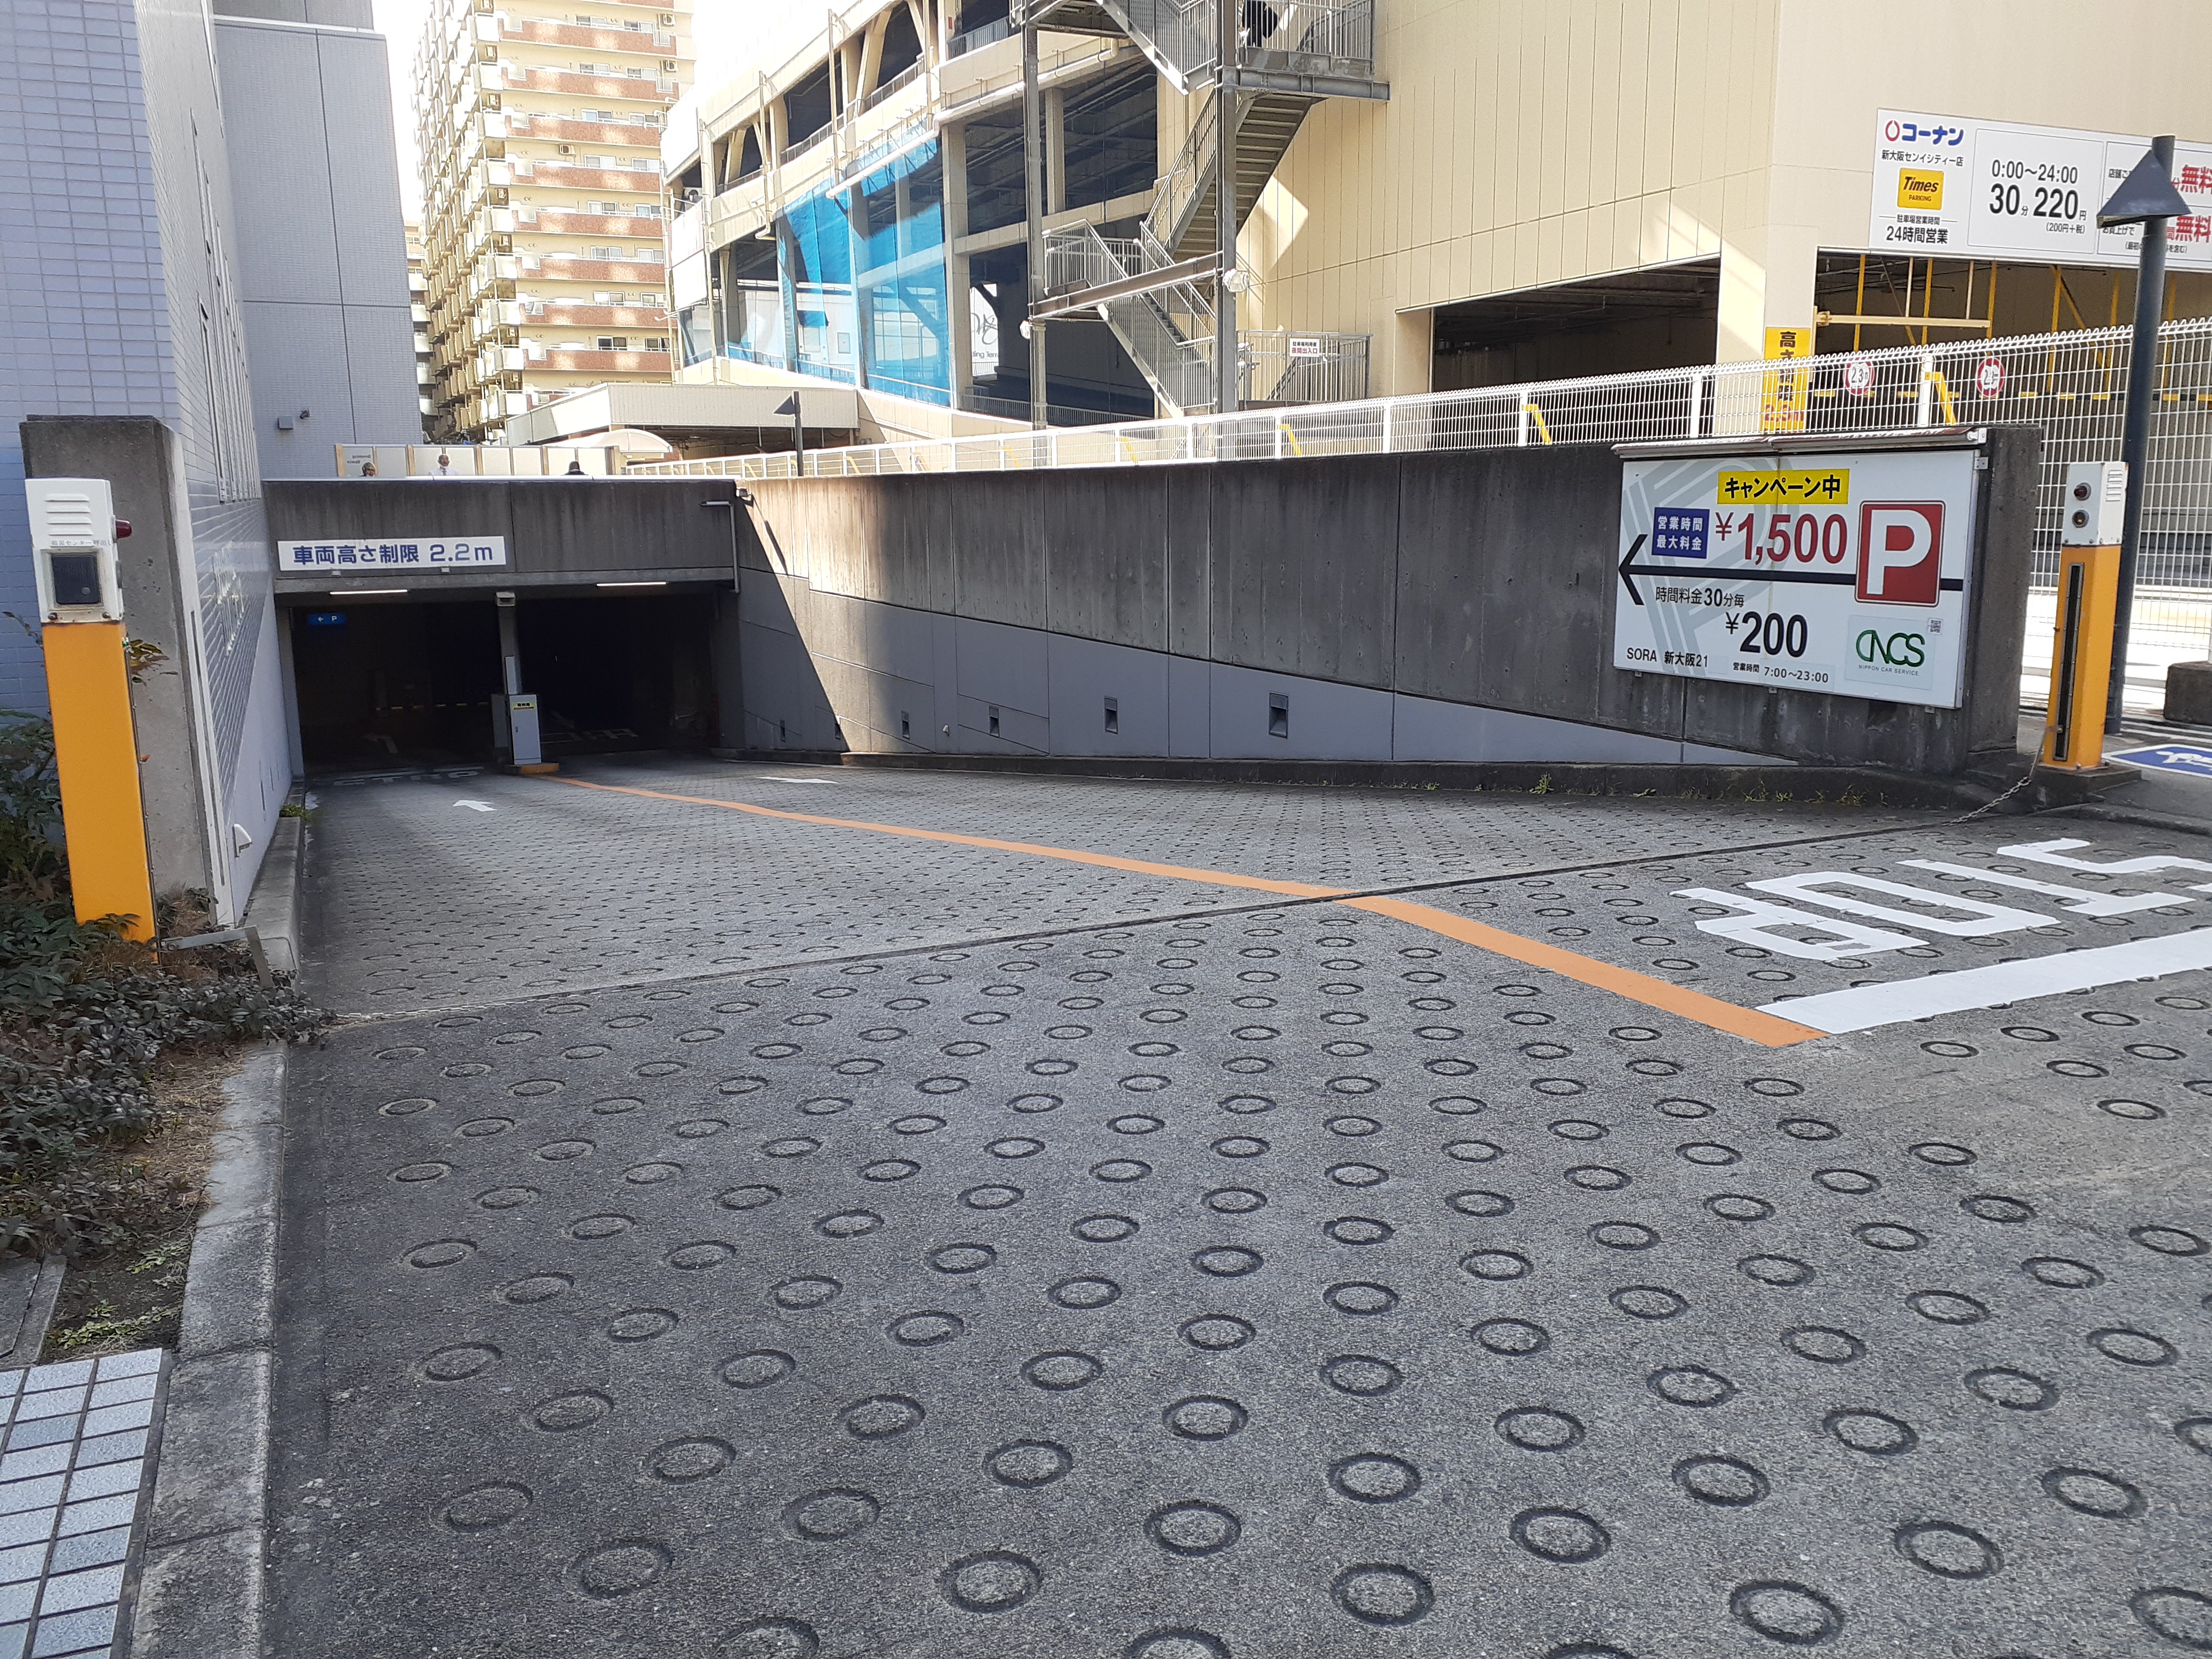 ソーラ新大阪21ビル月極駐車場の駐車場情報 日本駐車場検索